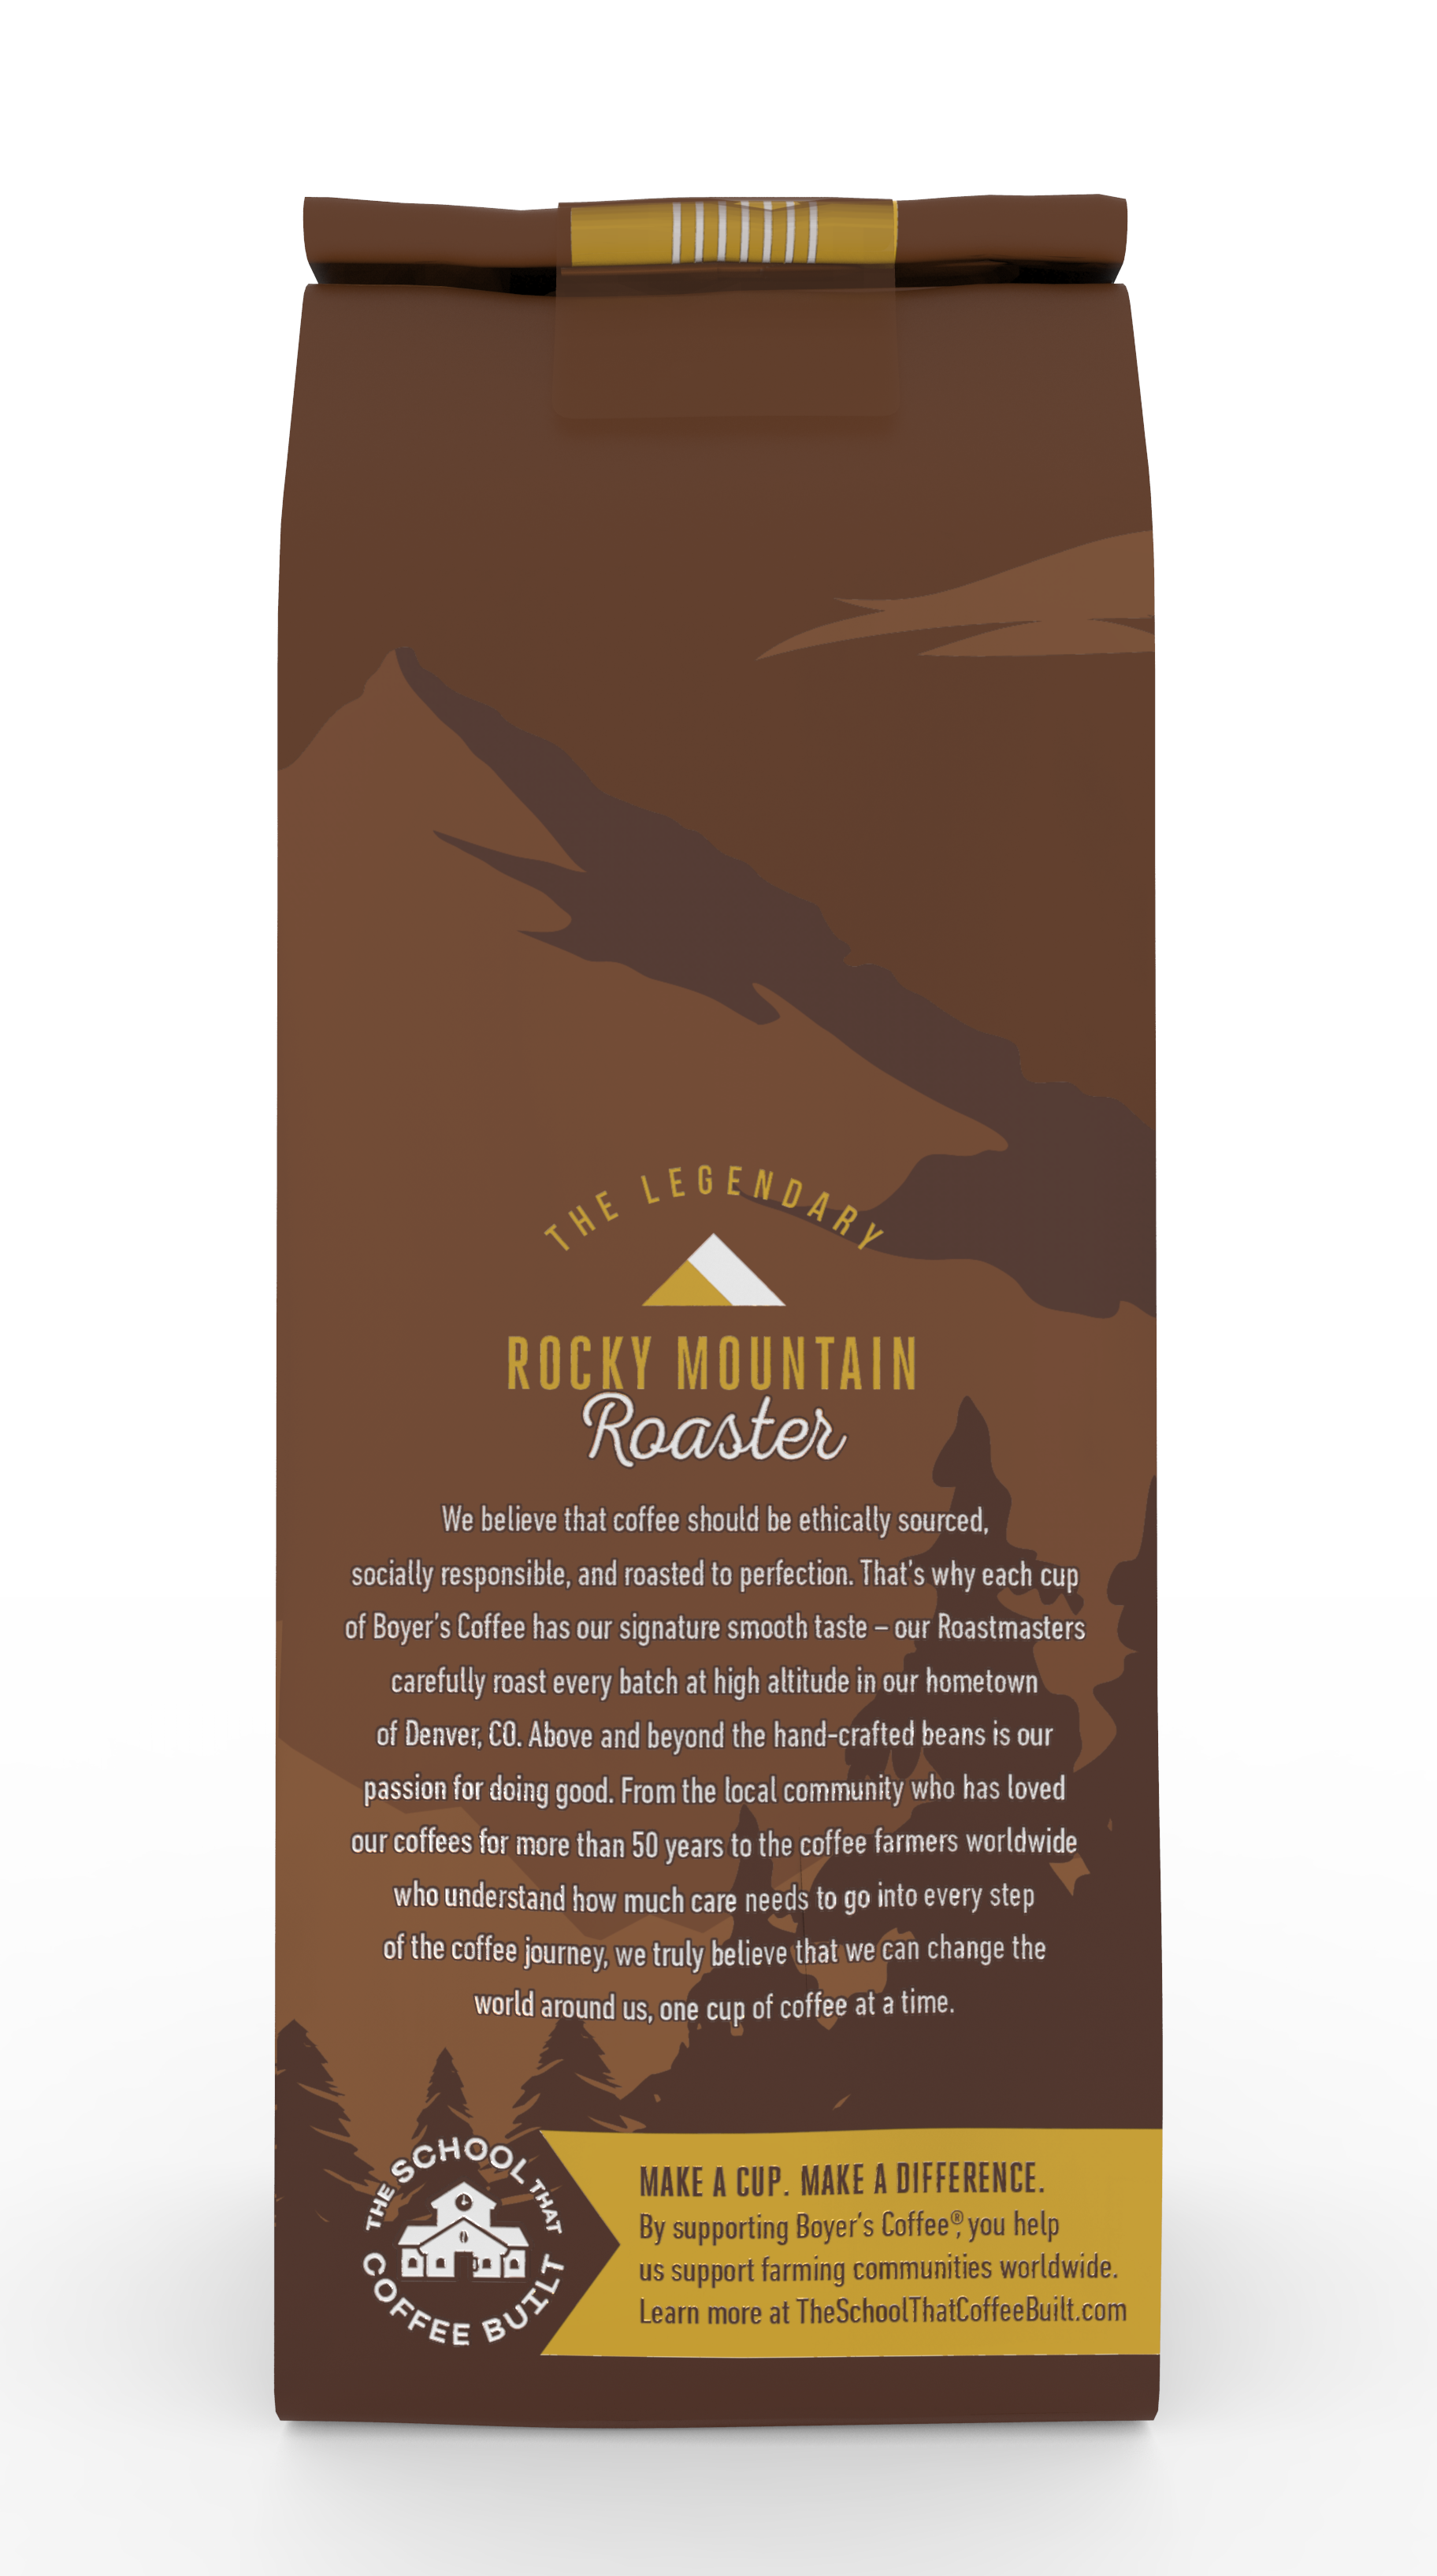 Rockies Roast Coffee